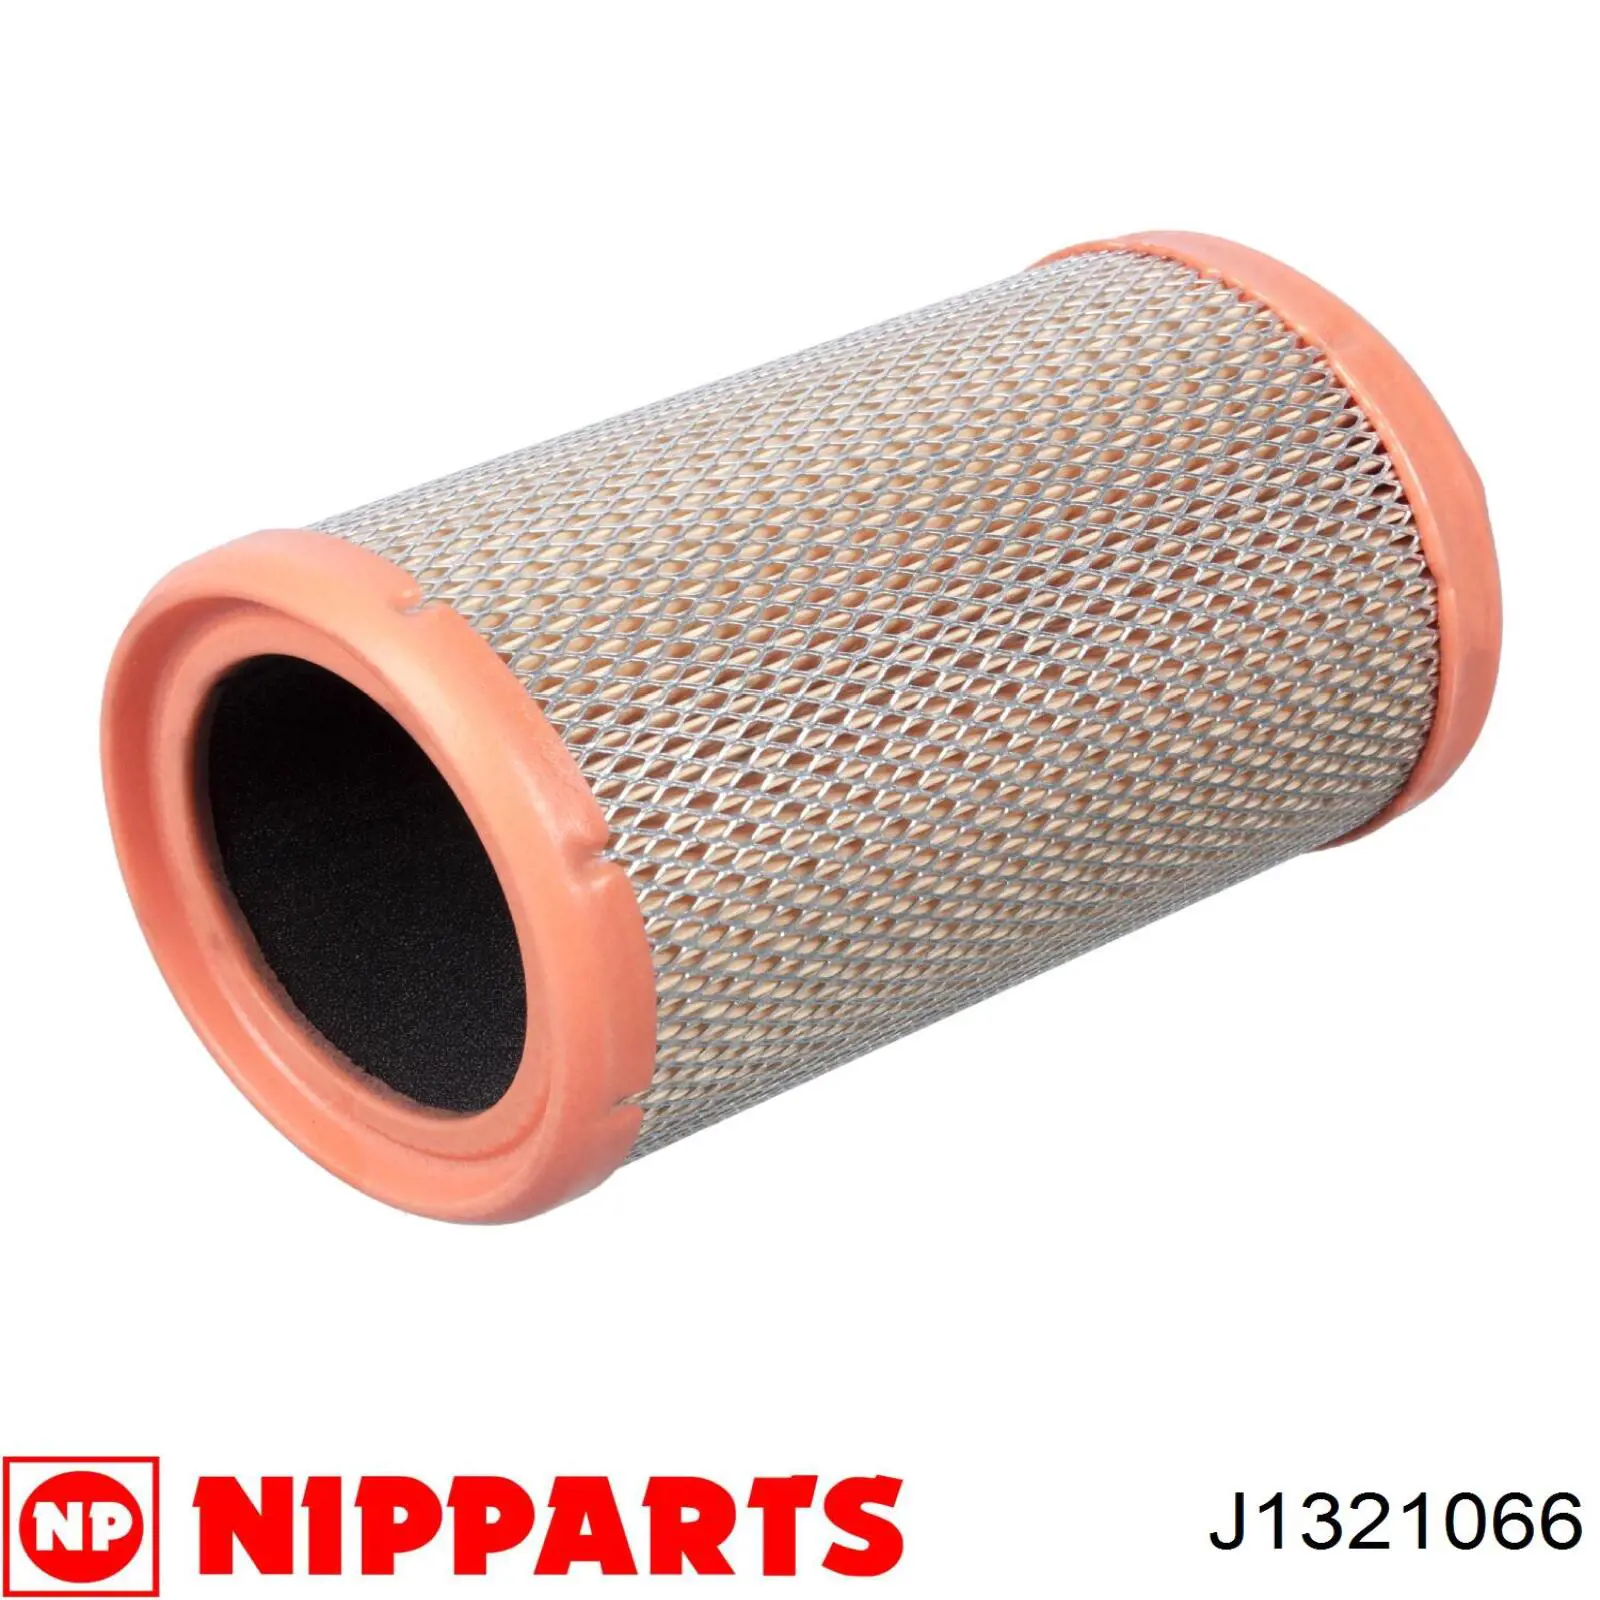 J1321066 Nipparts filtro de aire